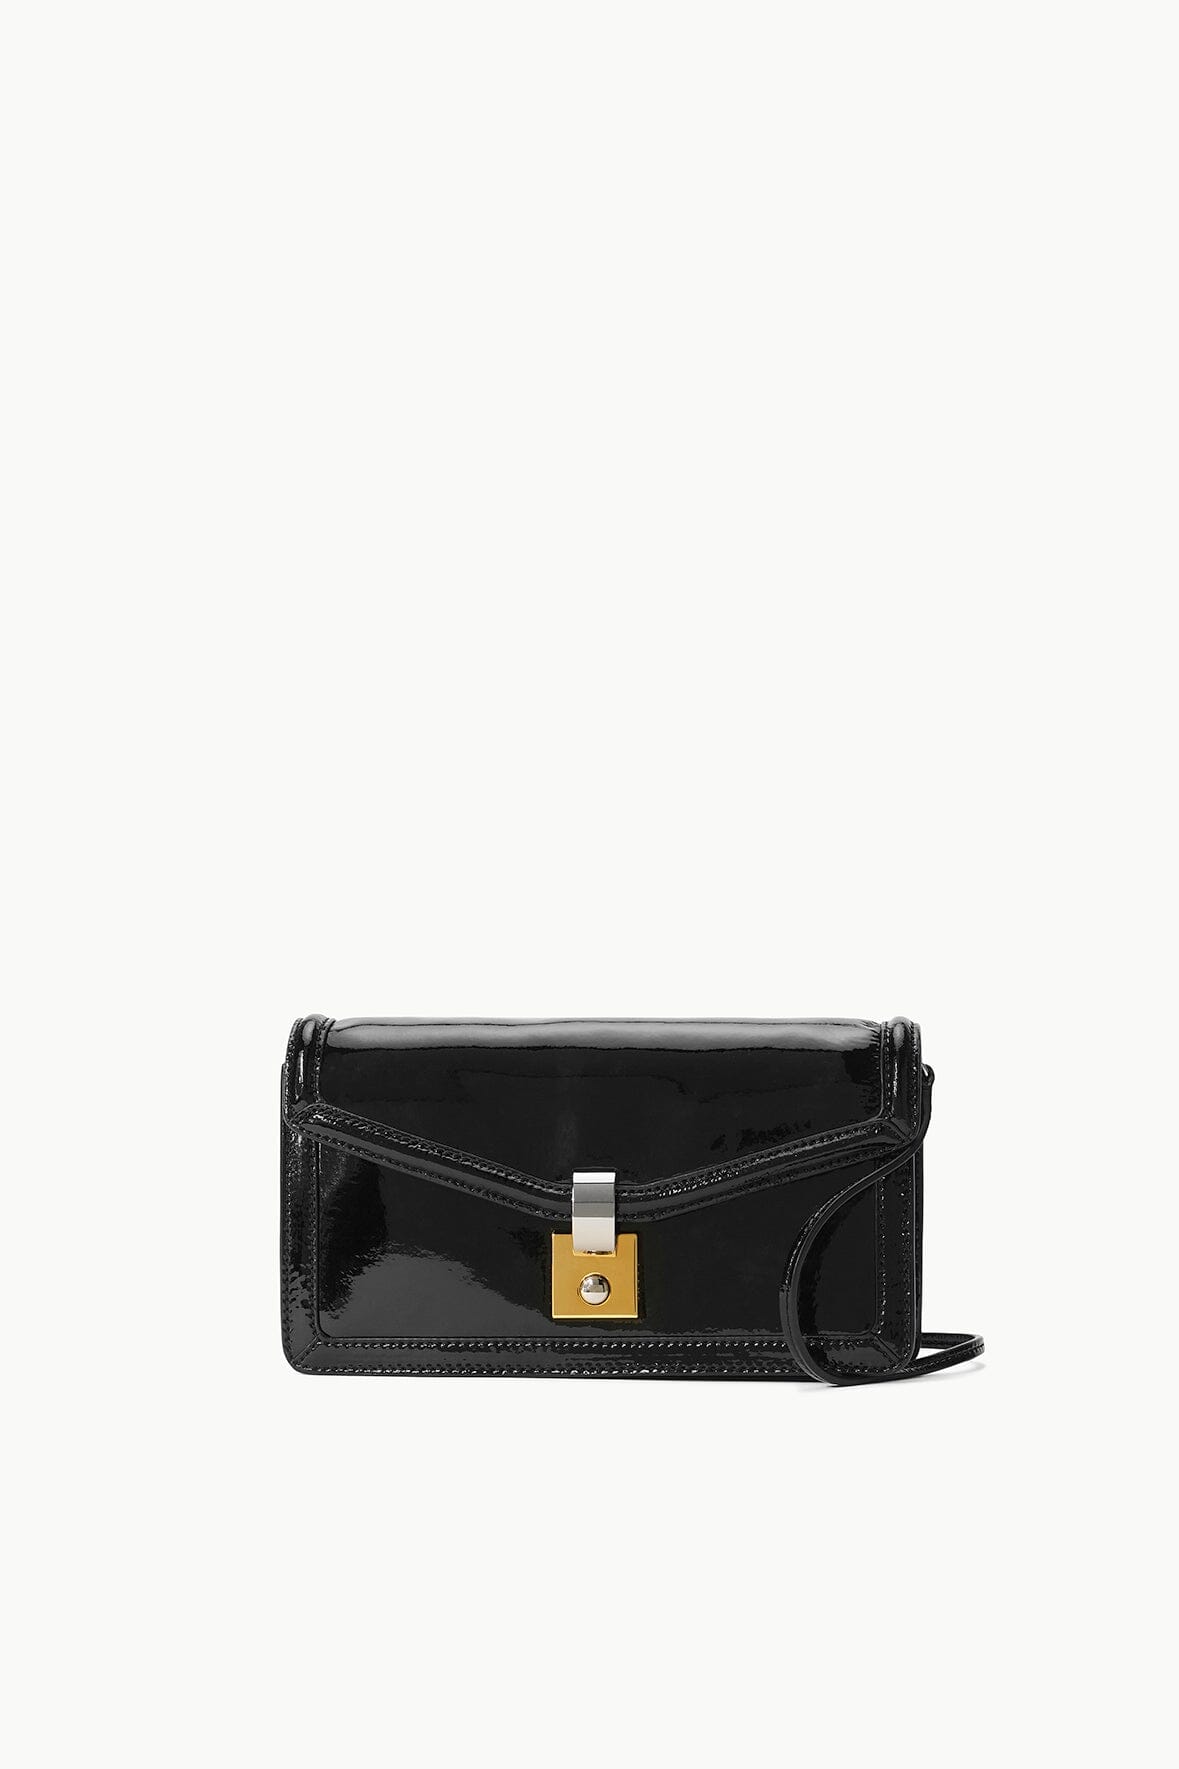 Medium Shopping Bag - Black Patent